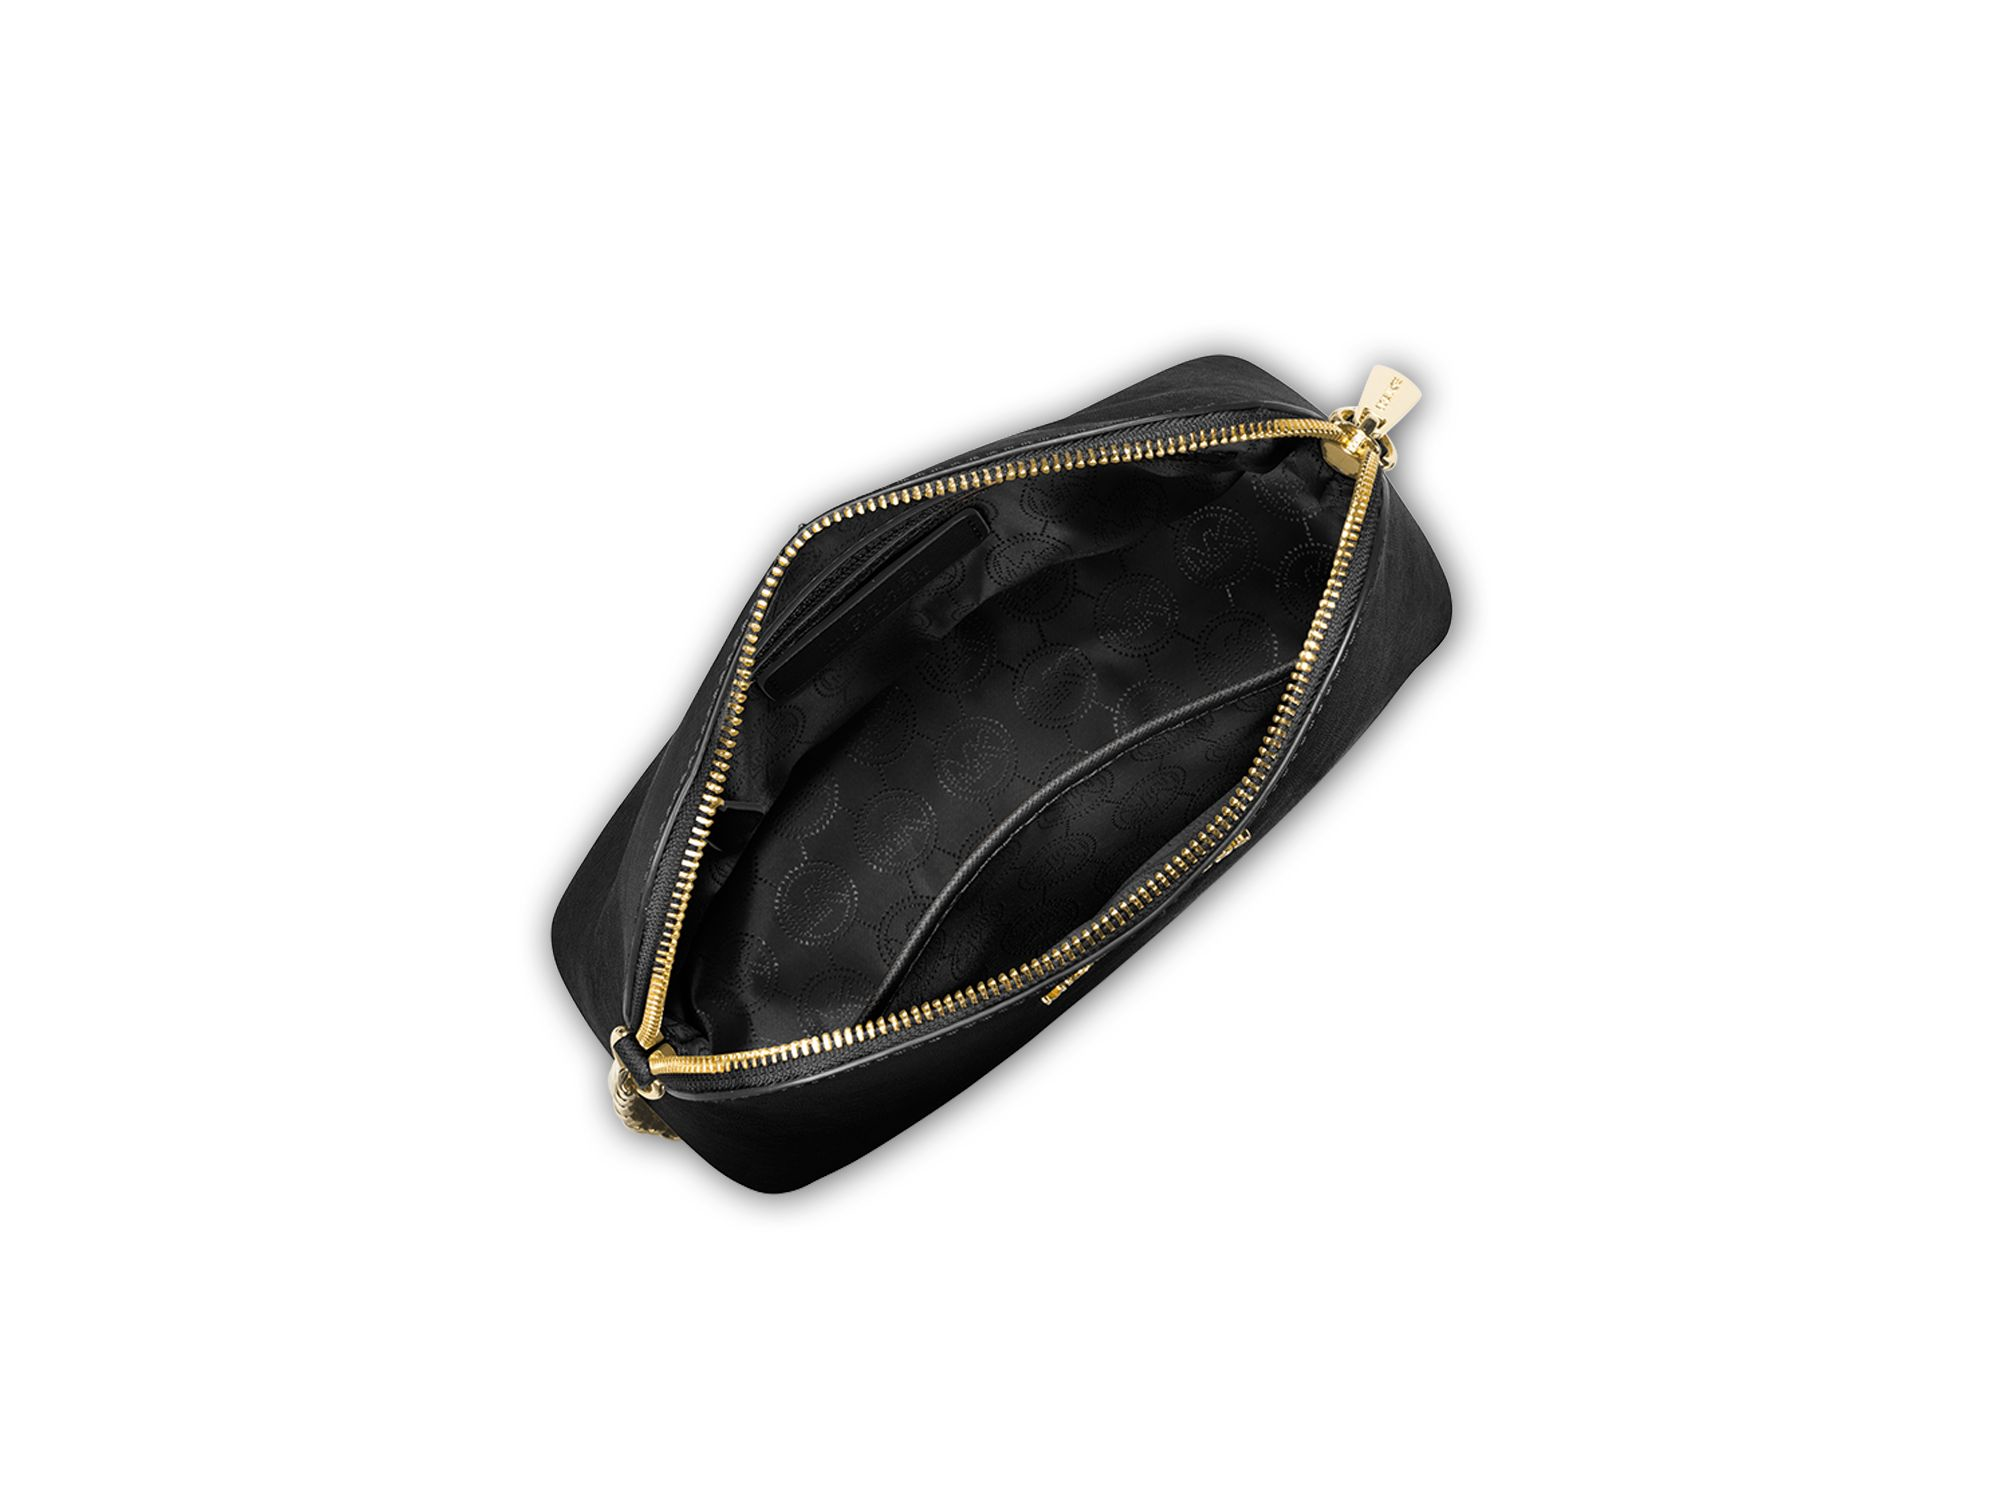 Michael Kors Cindy Large Saffiano Leather Crossbody Bag in Black 